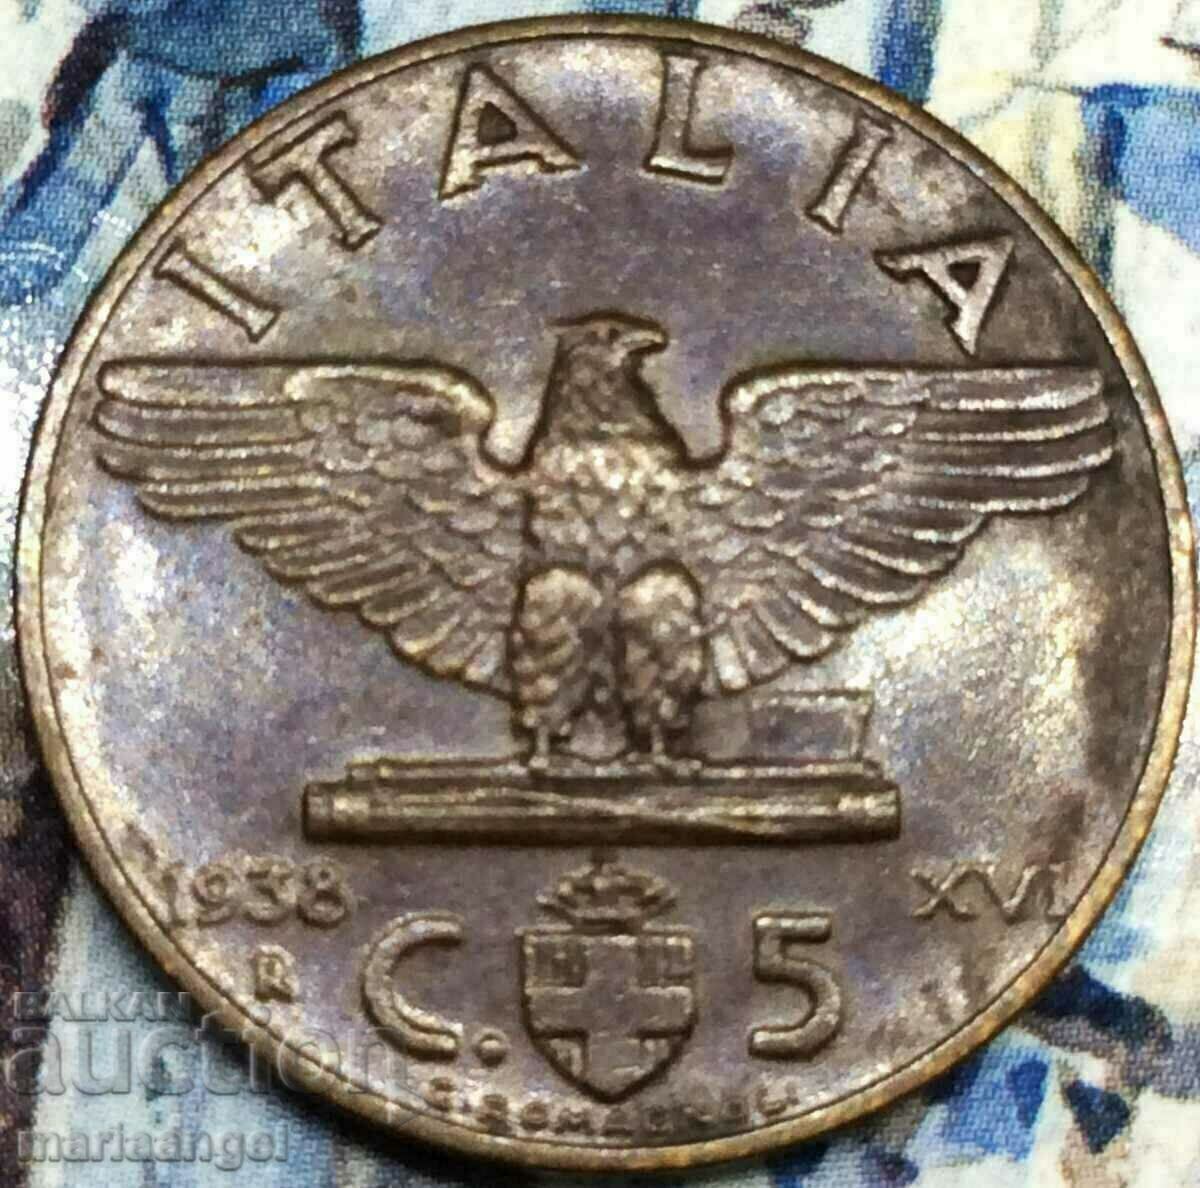 1938 5 centesimi Italy Eagle bronze